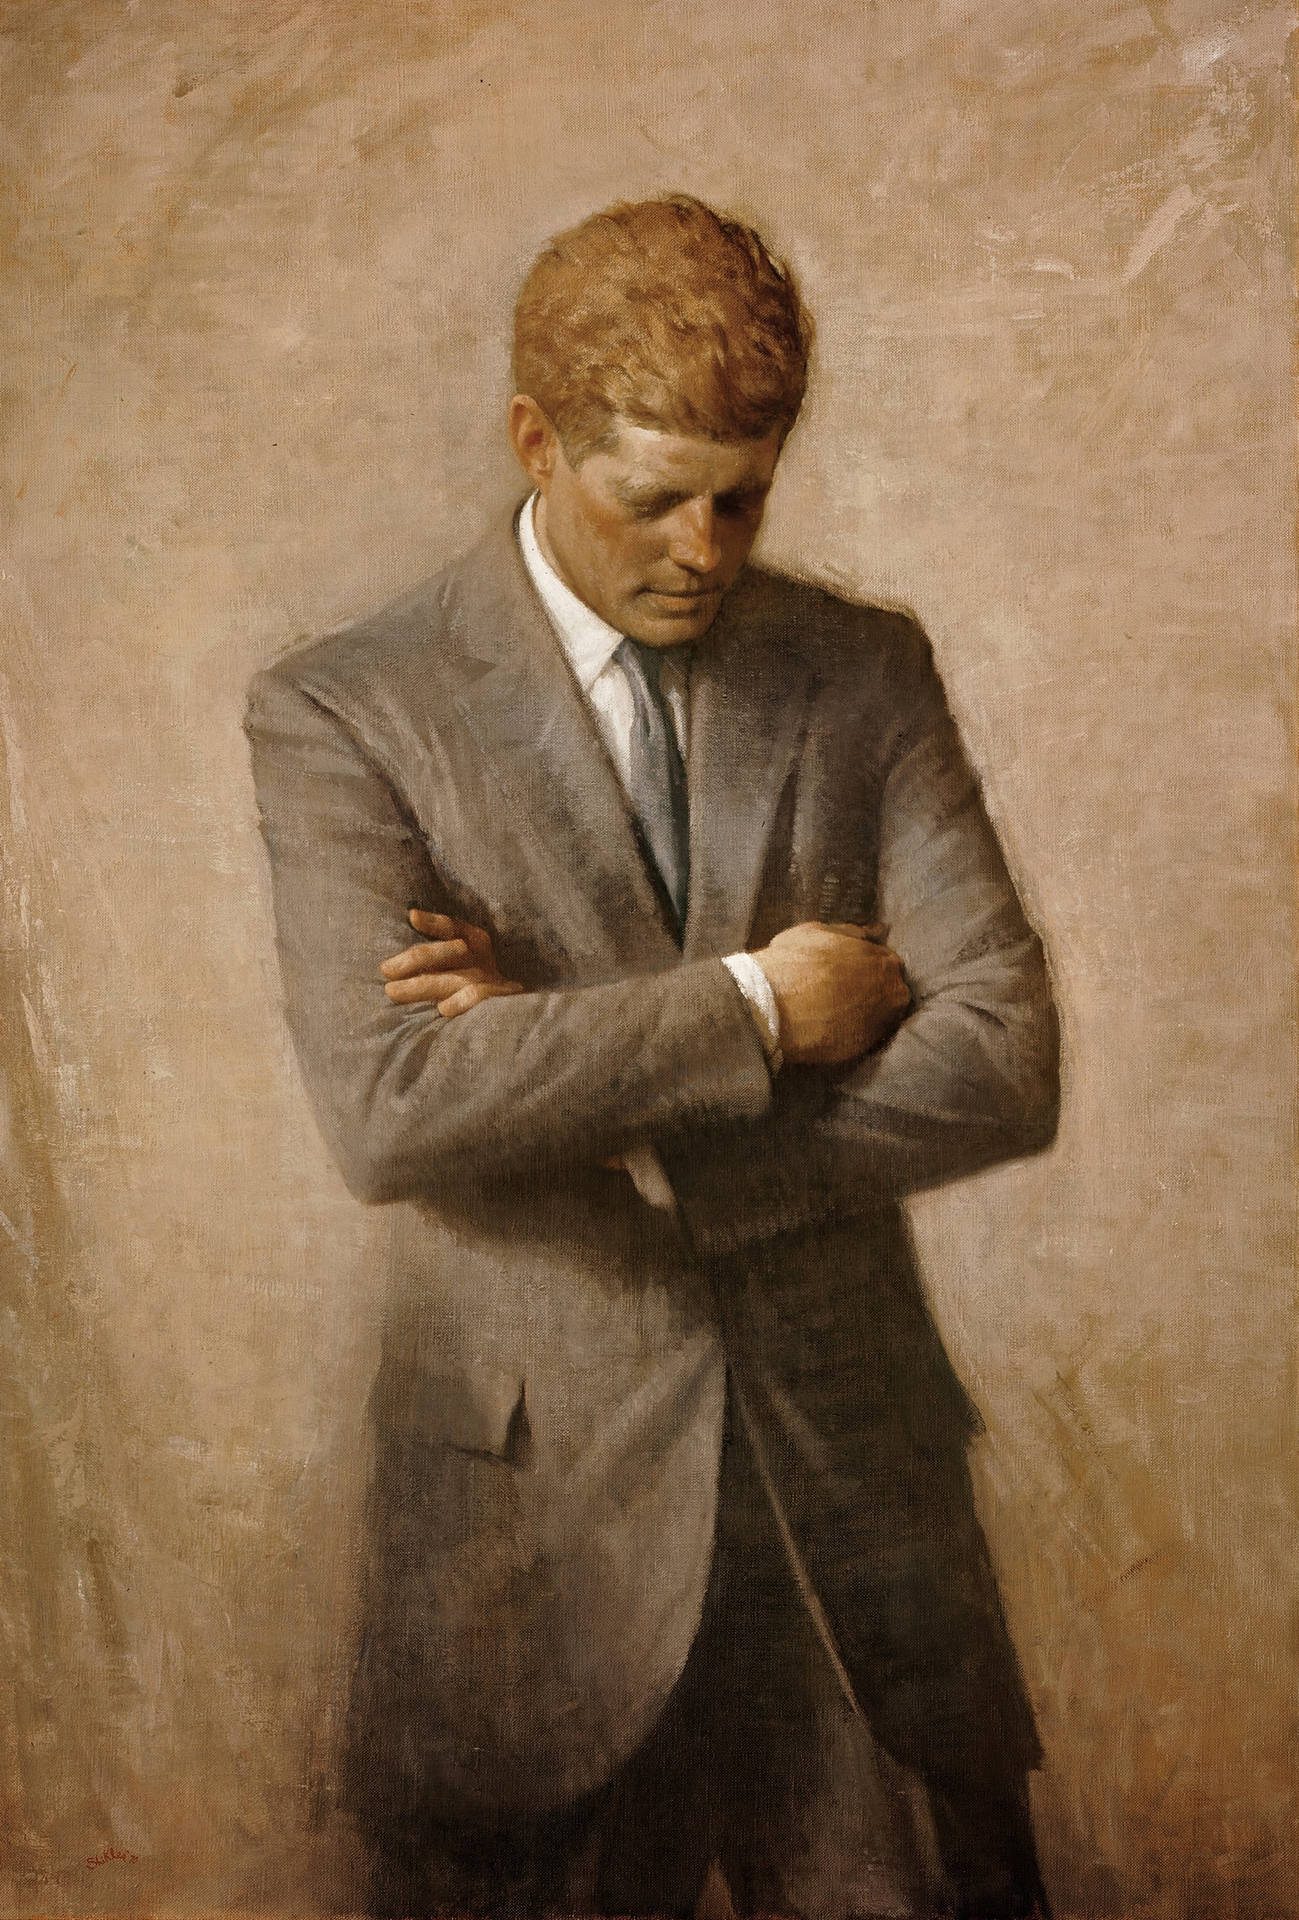 Portrait Painting John F. Kennedy Background